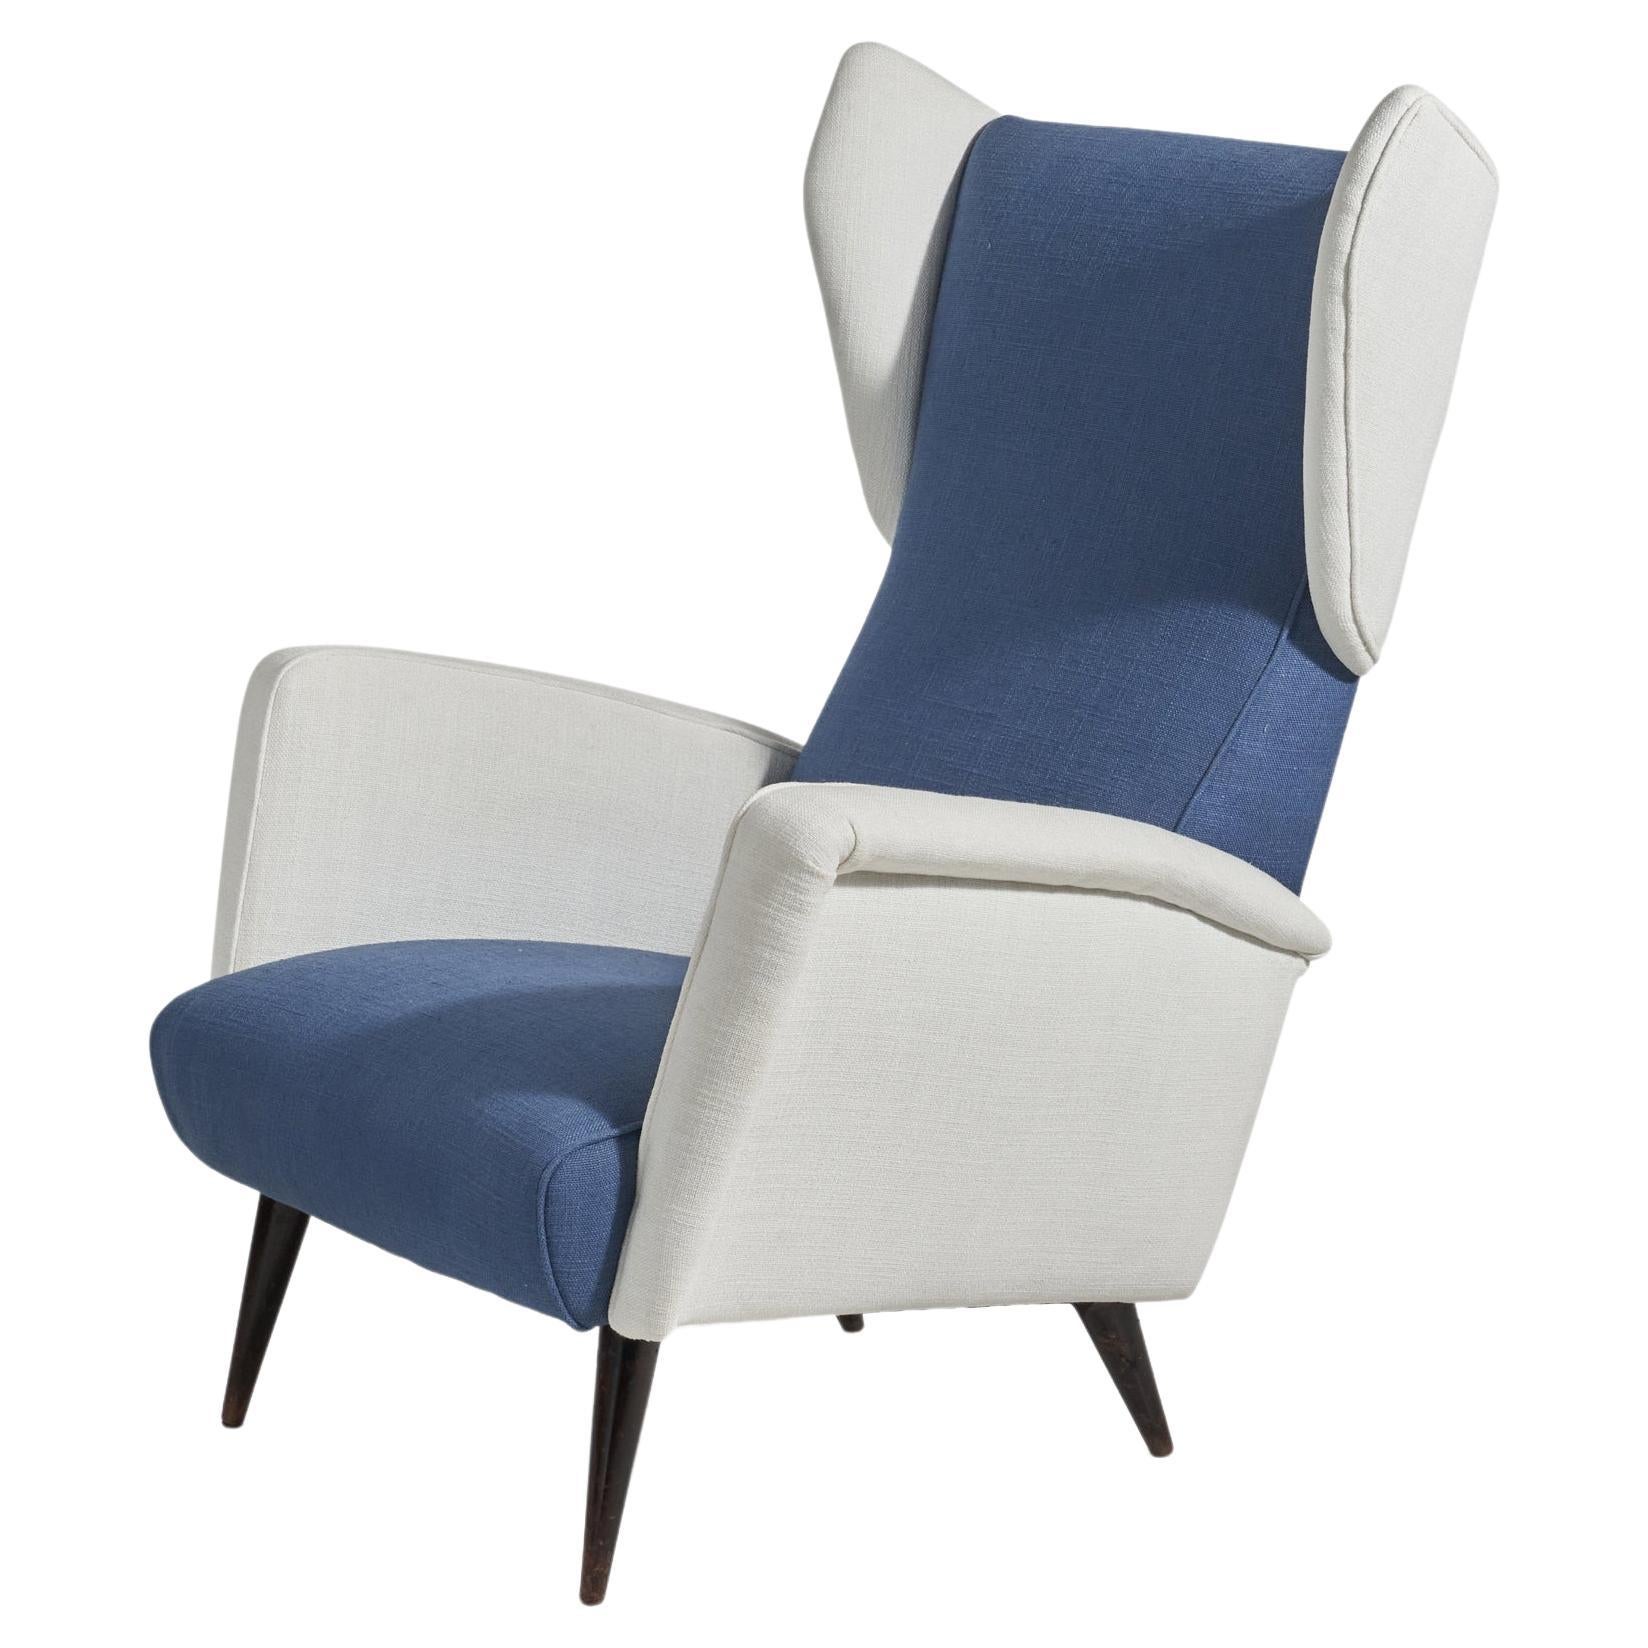 Gio Ponti, Wingback / Lounge Chair, White and Blue Fabric, Oak, Cassina, 1950s